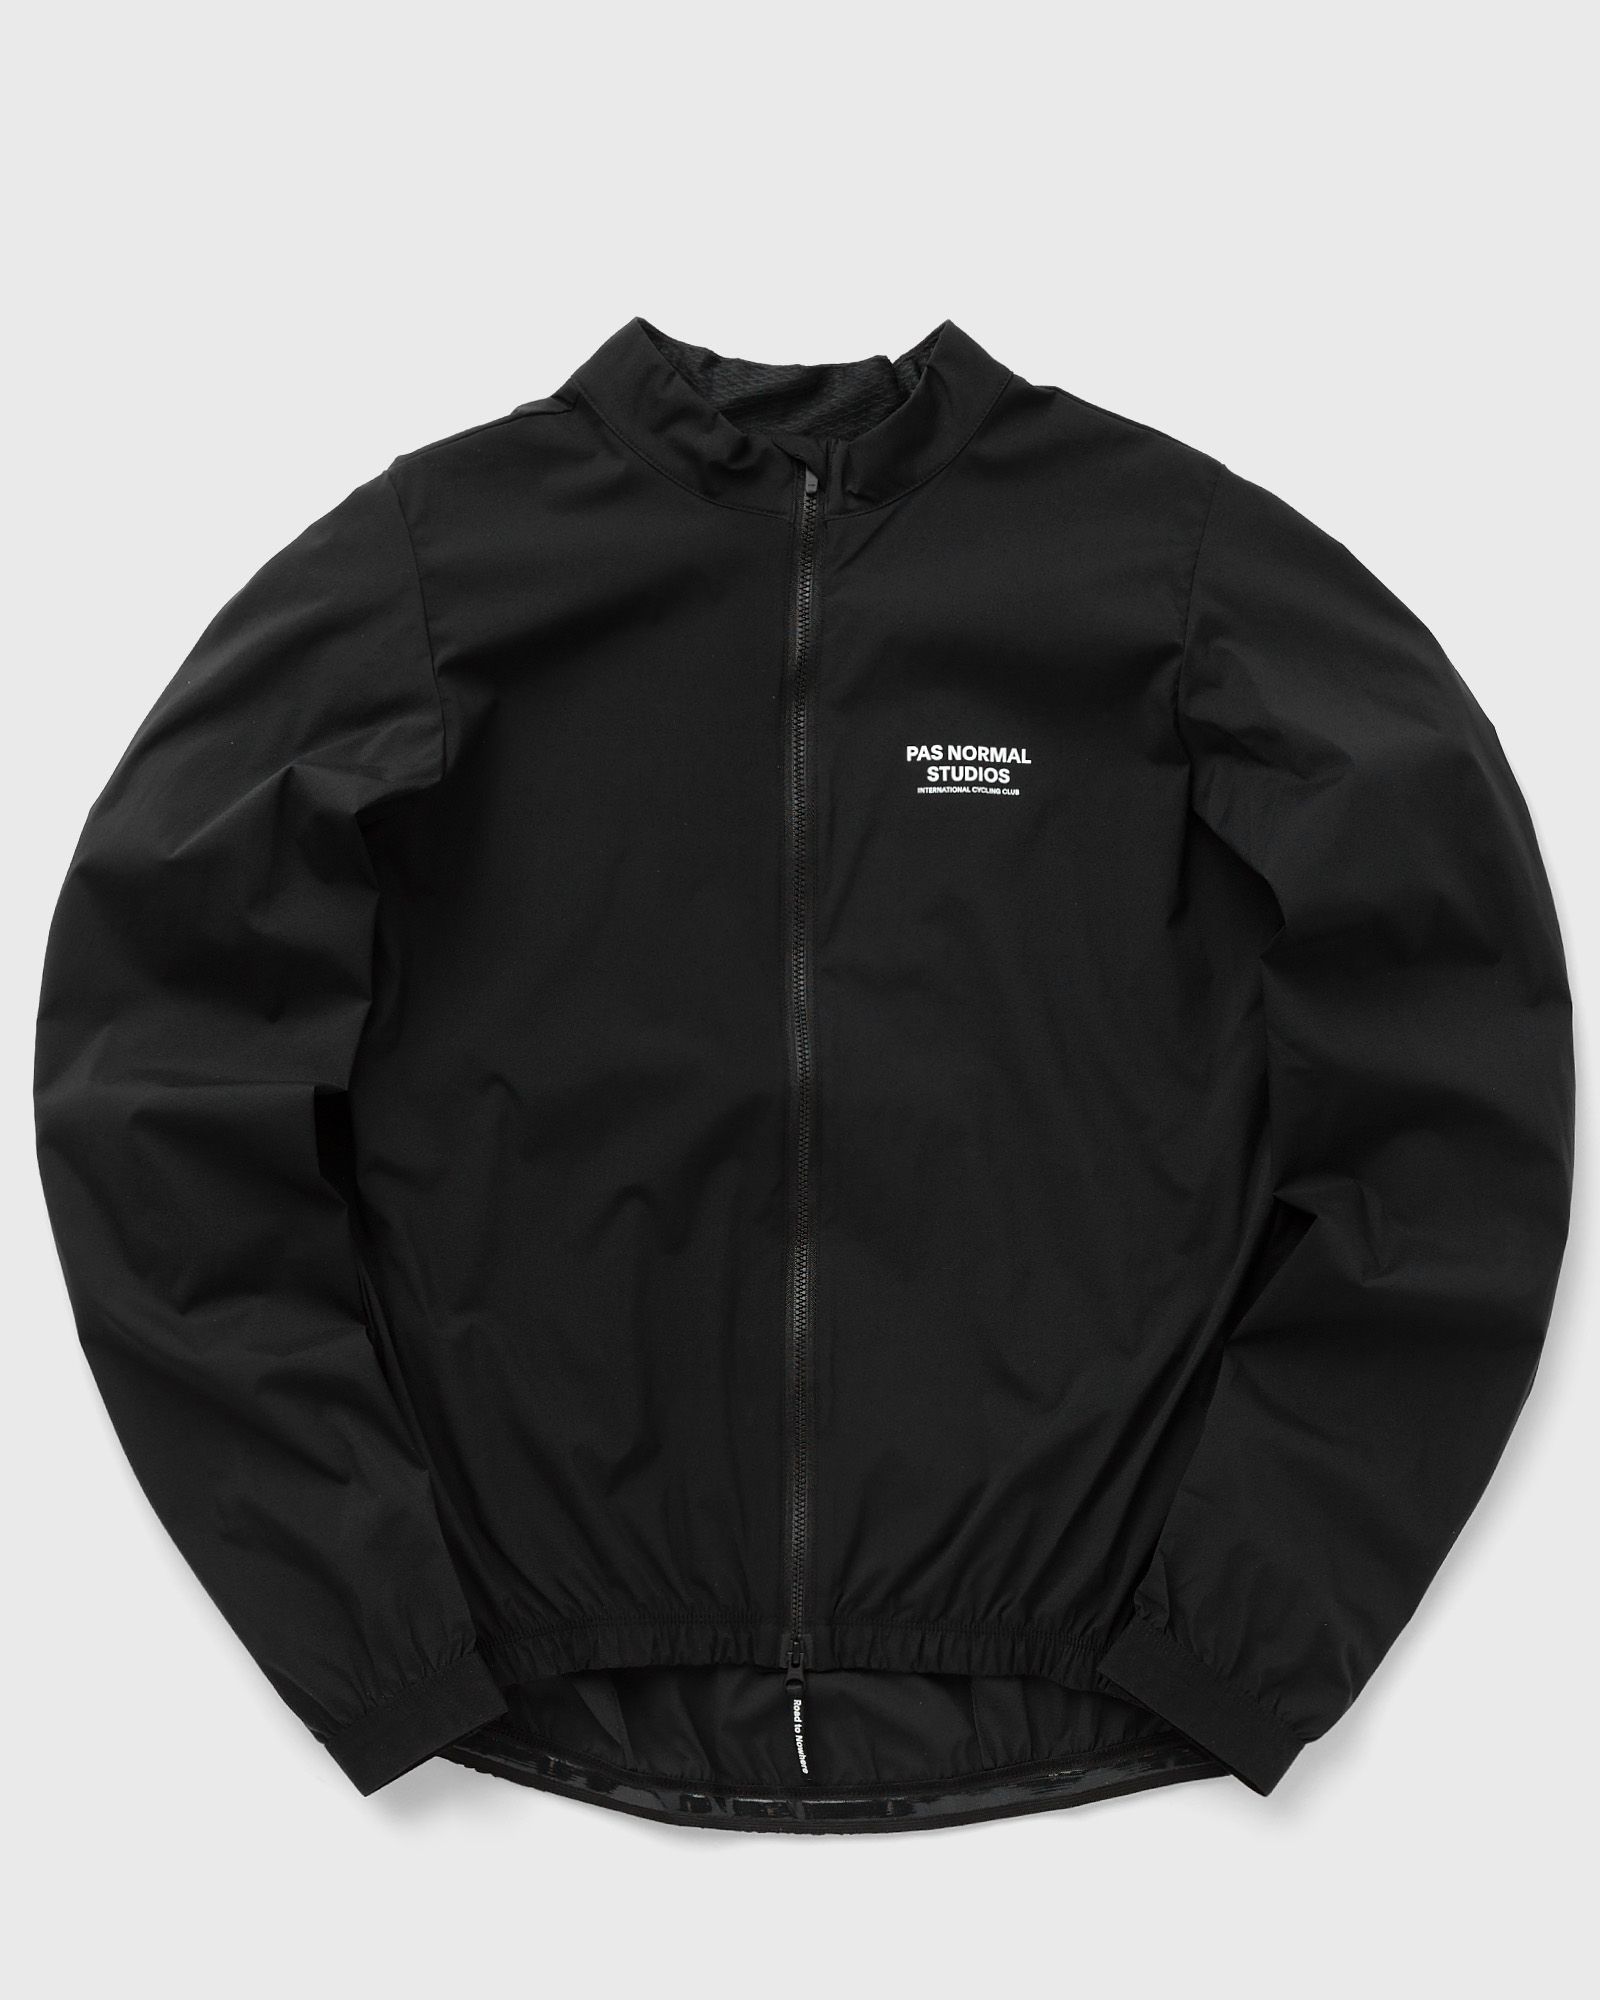 Pas Normal Studios - mechanism stow away jacket men track jackets black in größe:s